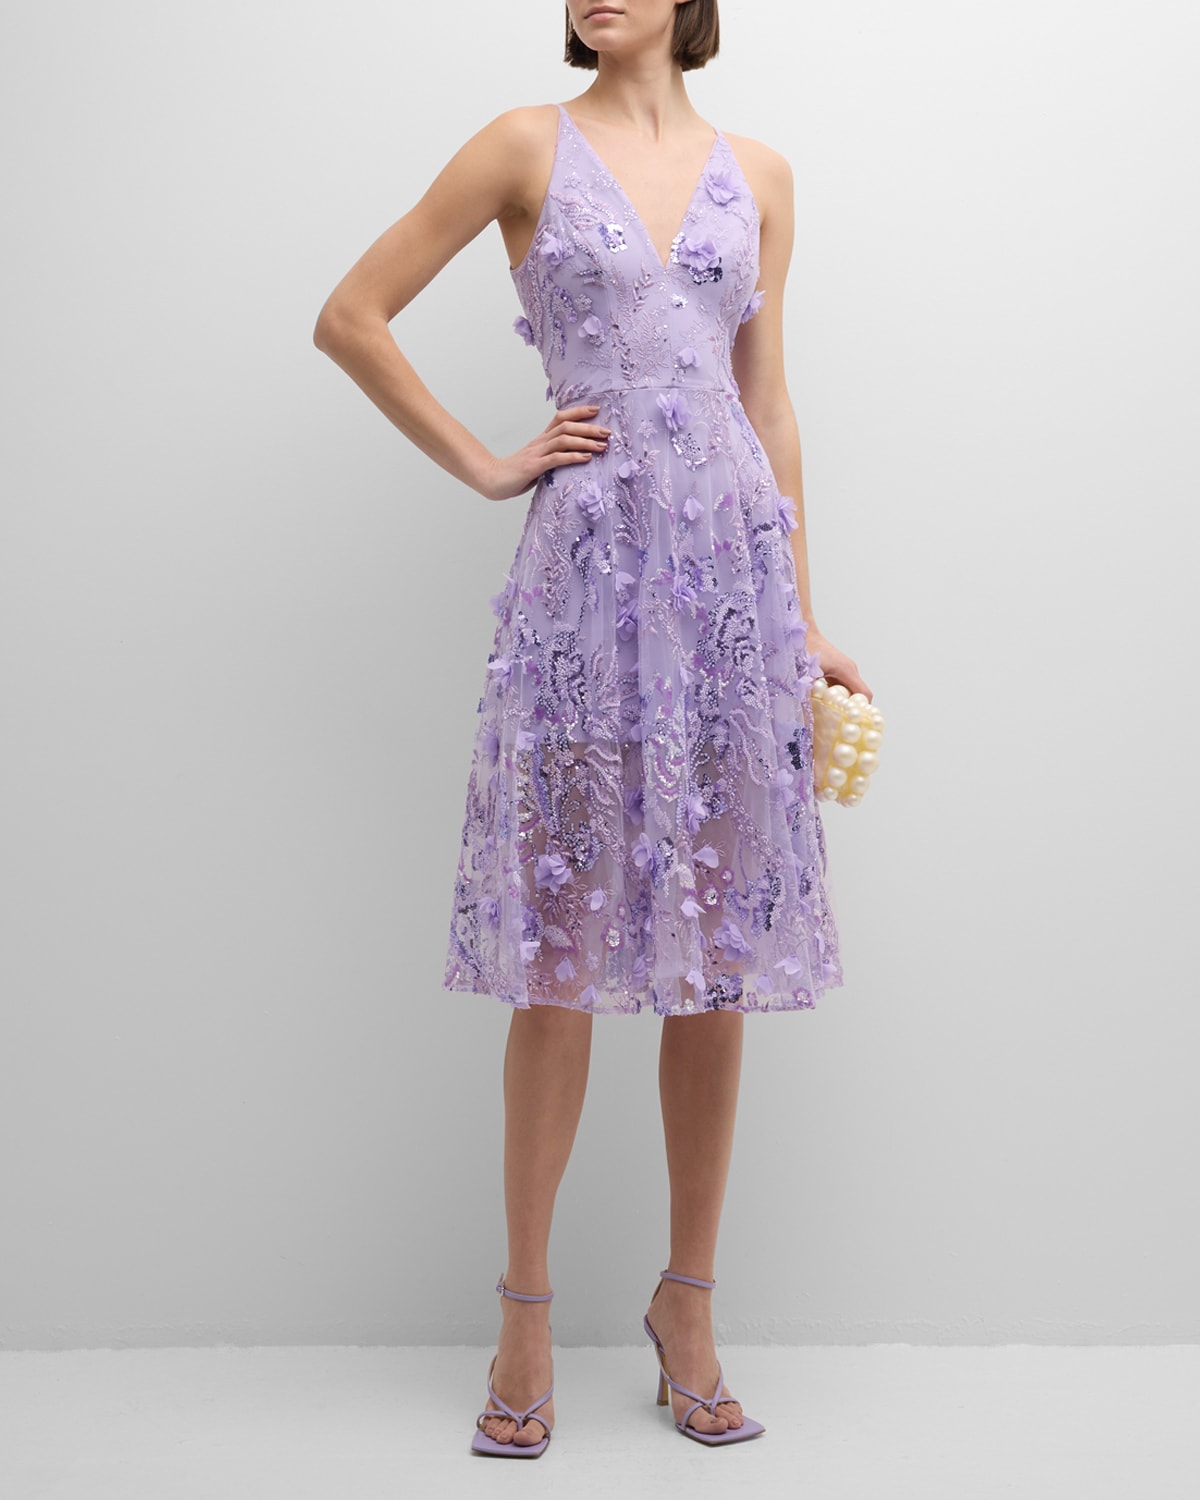 Shop Dress The Population Black Label Audrey Sequin Floral-embroidered Midi Dress In Lavender Multi